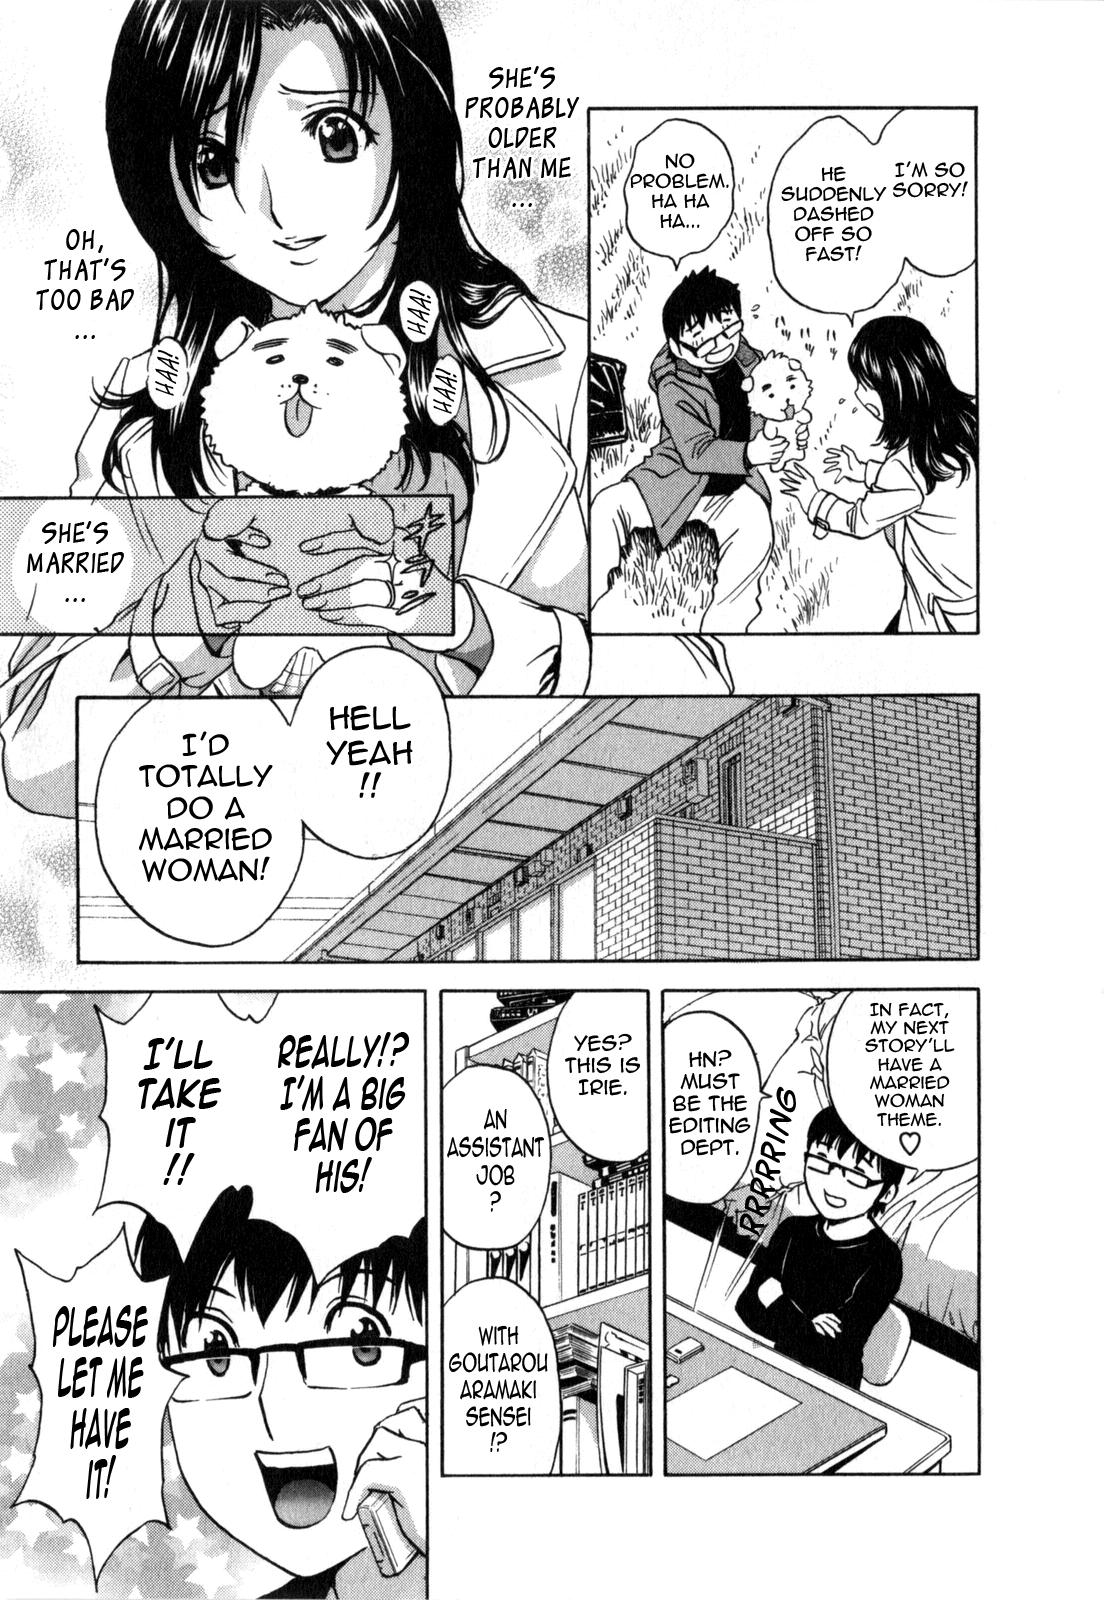 [Hidemaru] Life with Married Women Just Like a Manga 1 - Ch. 1-9 [English] {Tadanohito} 11